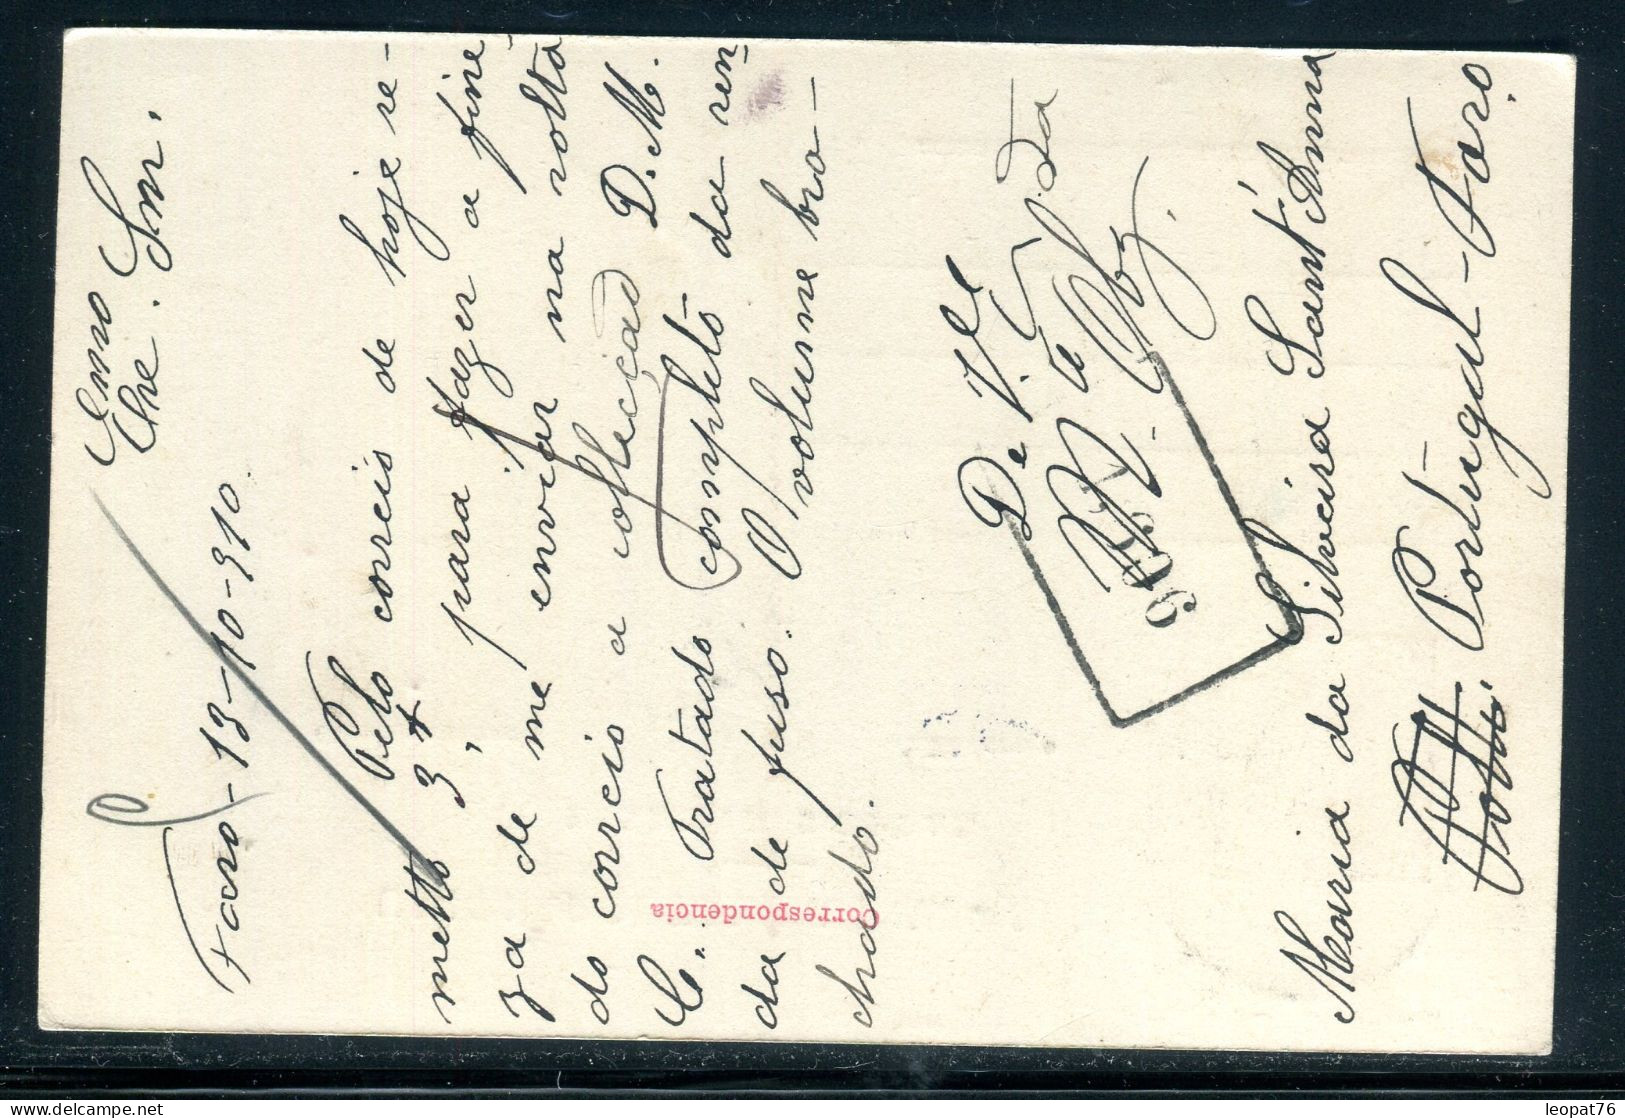 Portugal - Entier Postal De Faro Pour Paris En 1910  - M 57 - Postwaardestukken